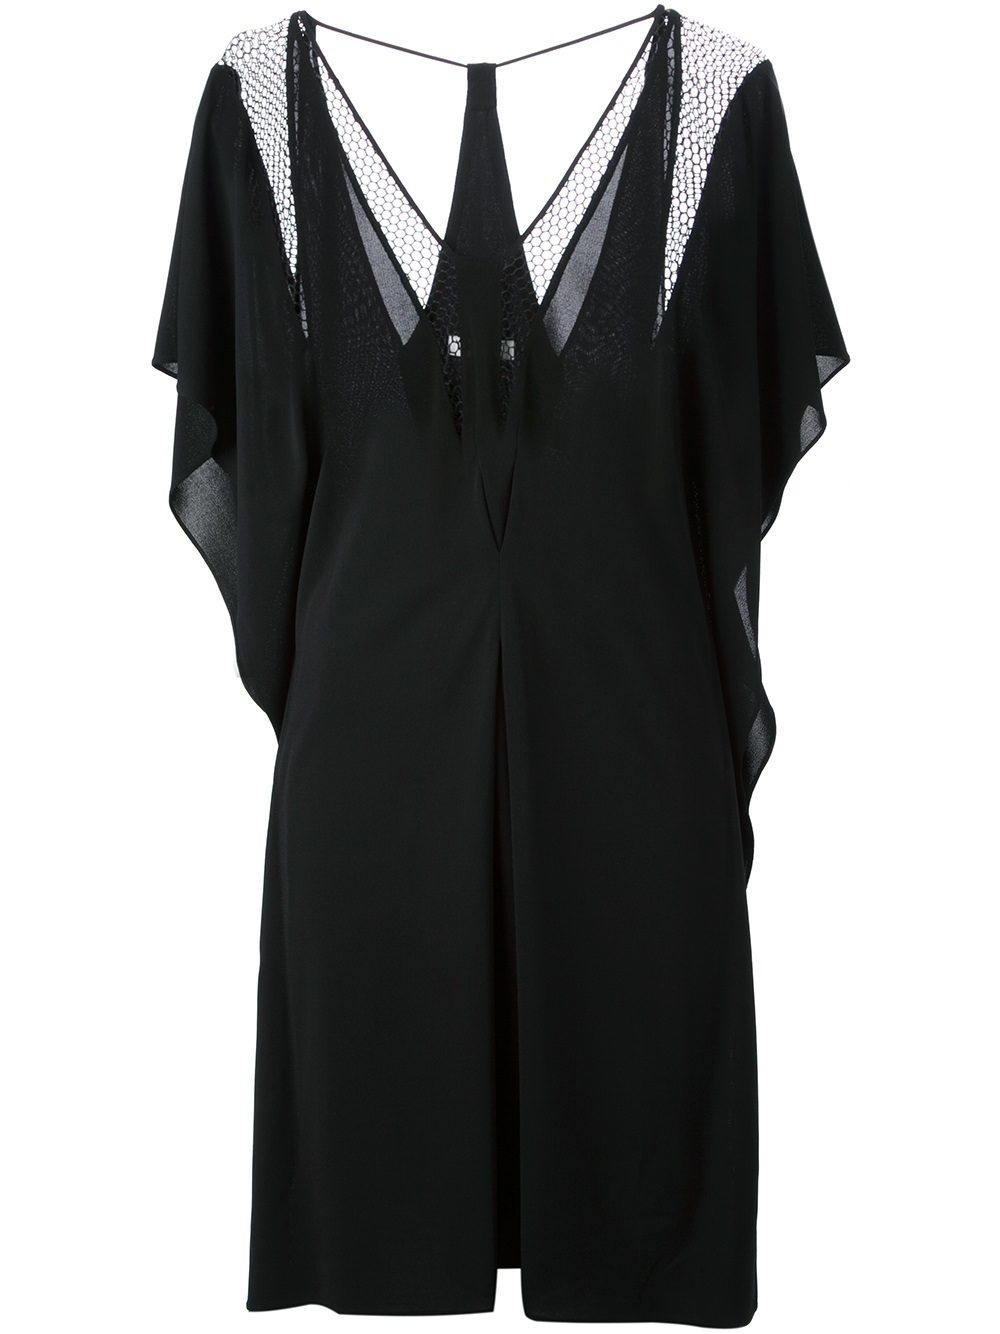 Lyst - Vionnet Mesh Detail Dress in Black